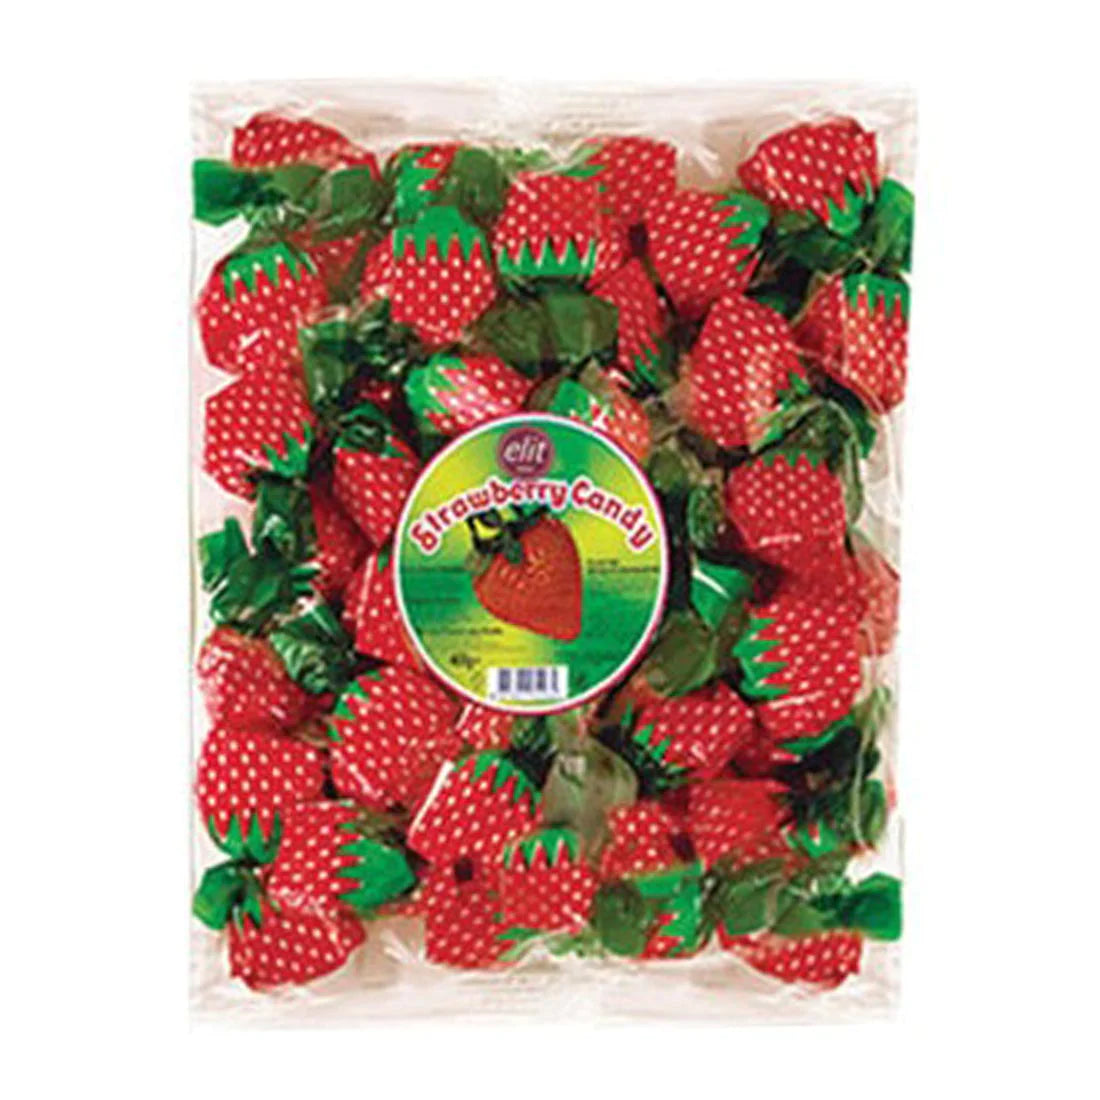 Elit Strawberry Fruit Filled Candy 400g